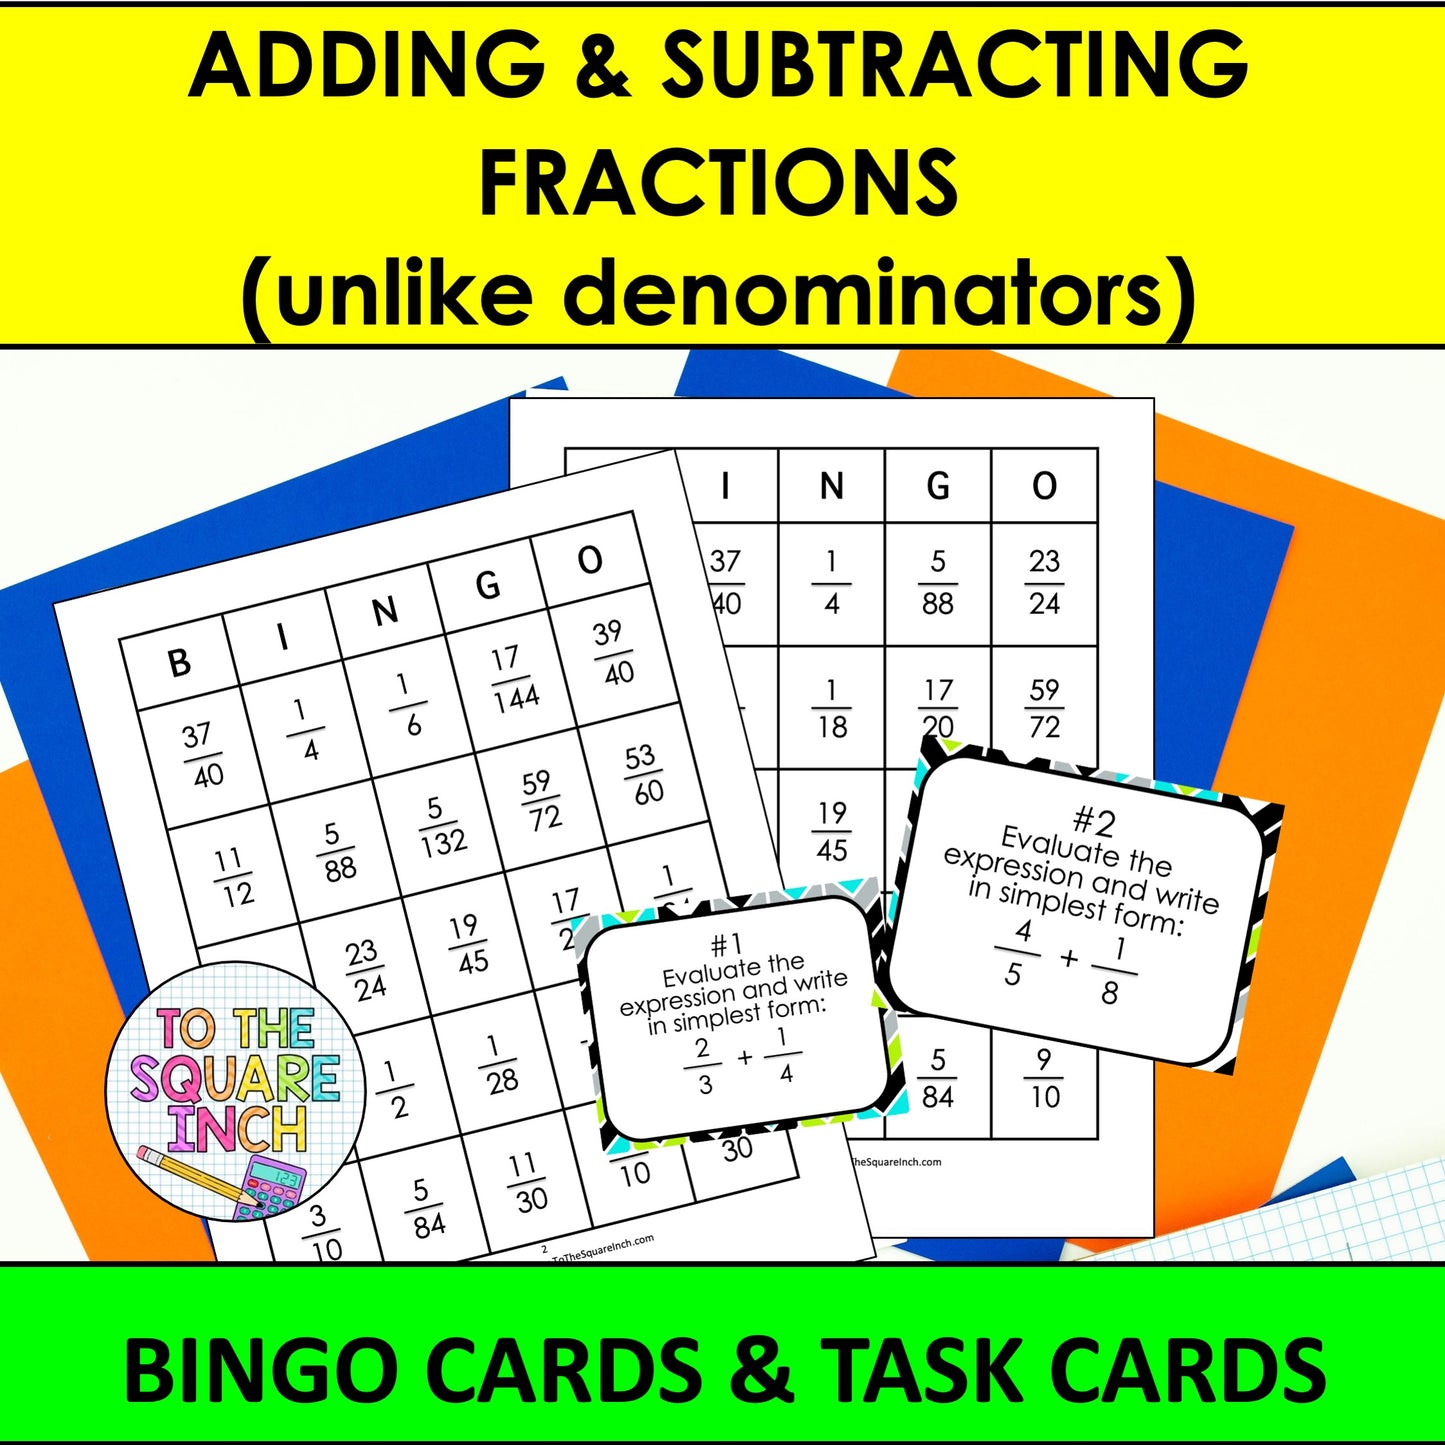 Adding and Subtracting Fractions Bingo Game